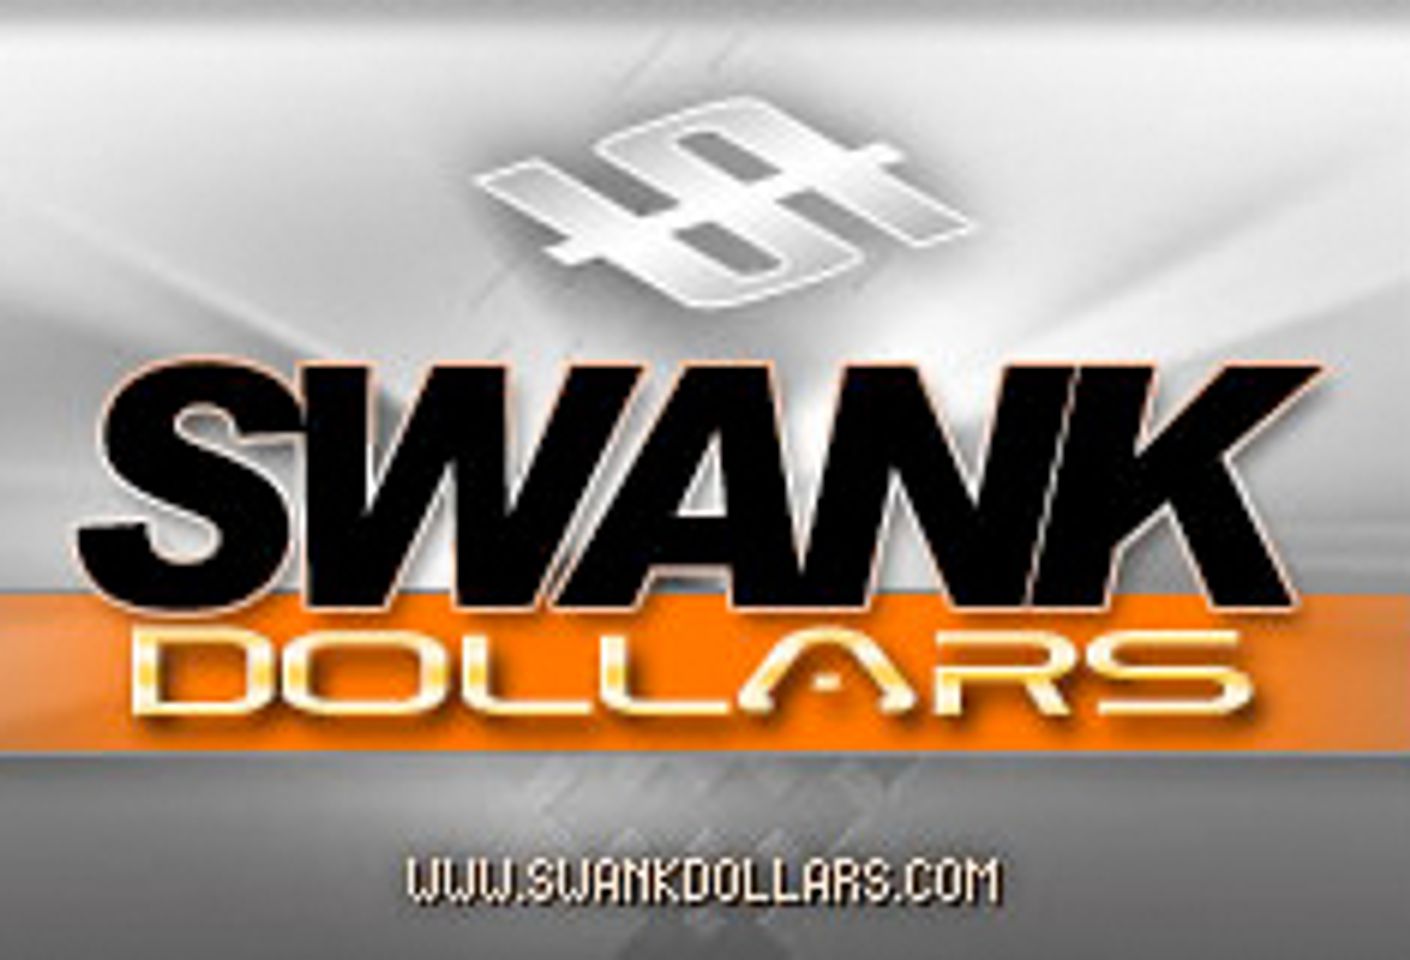 SwankDollars.com Relaunches GenesisMagazine.com